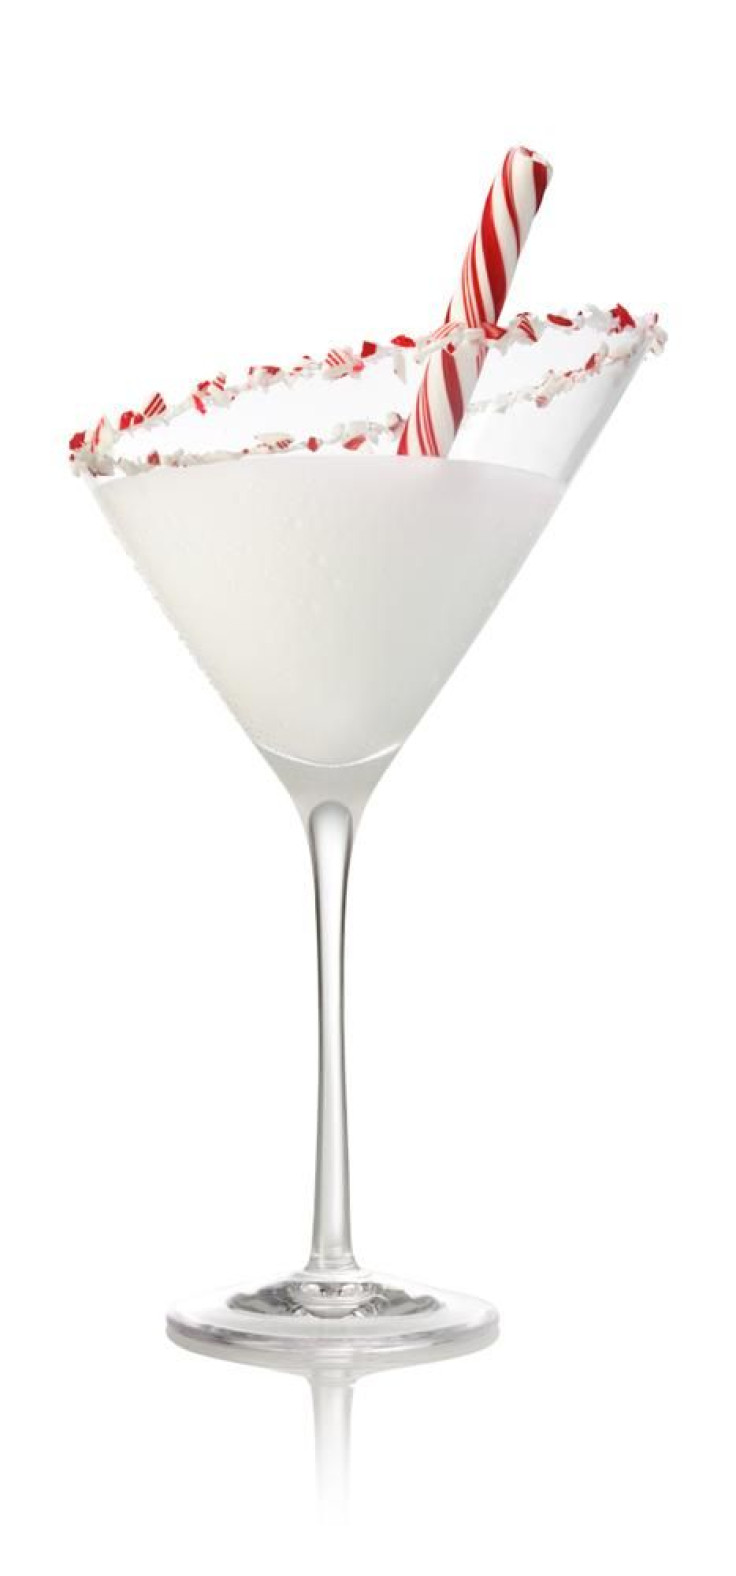 SVEDKA hallmark cocktail